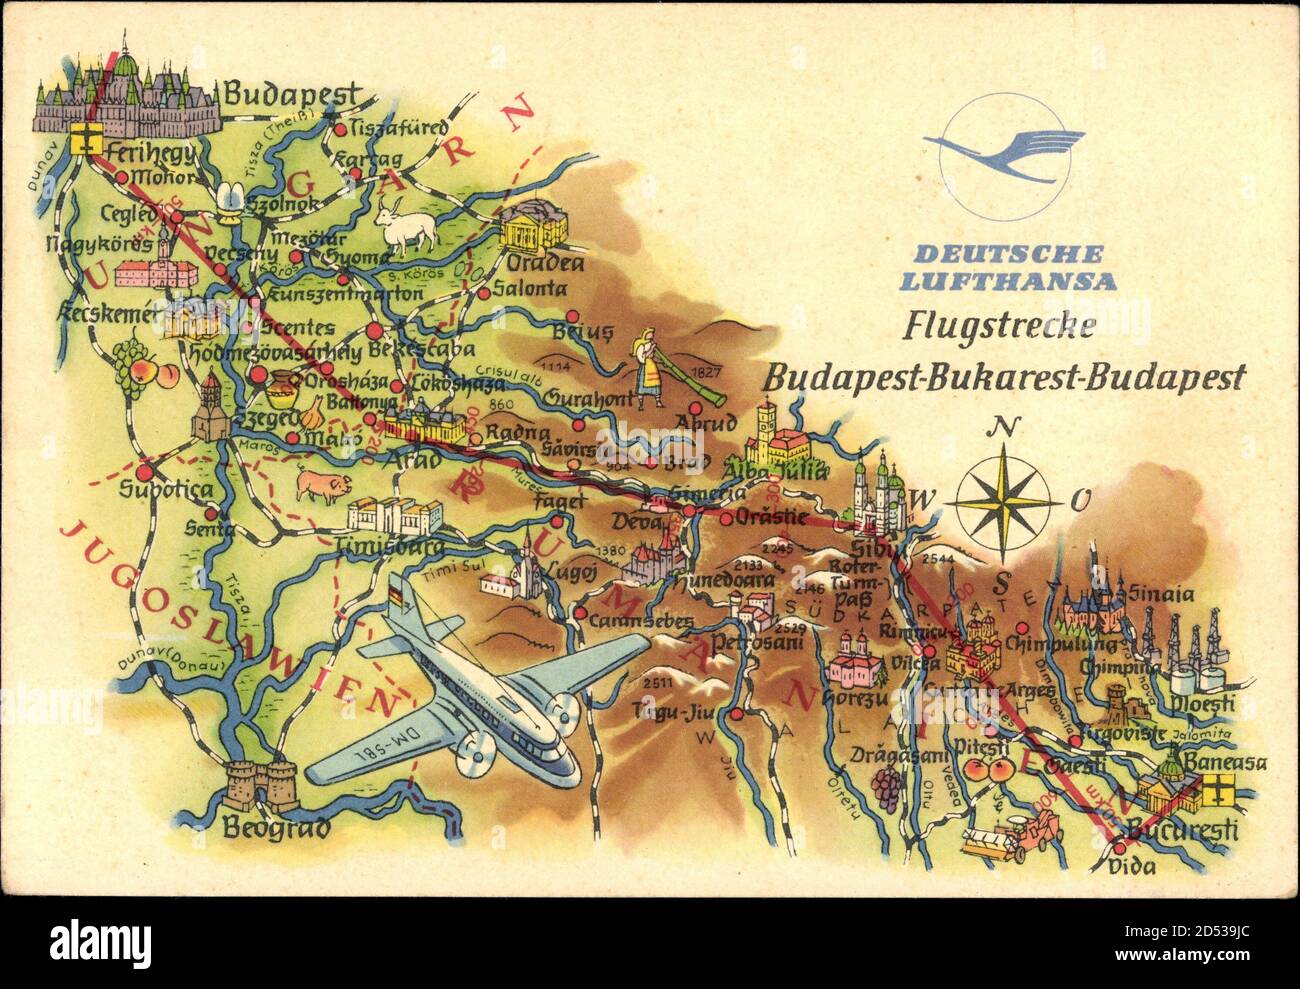 Luftstrecken Lufthansa, Flugstrecke Budapest Bukarest, Jugoslawien | usage worldwide Stock Photo